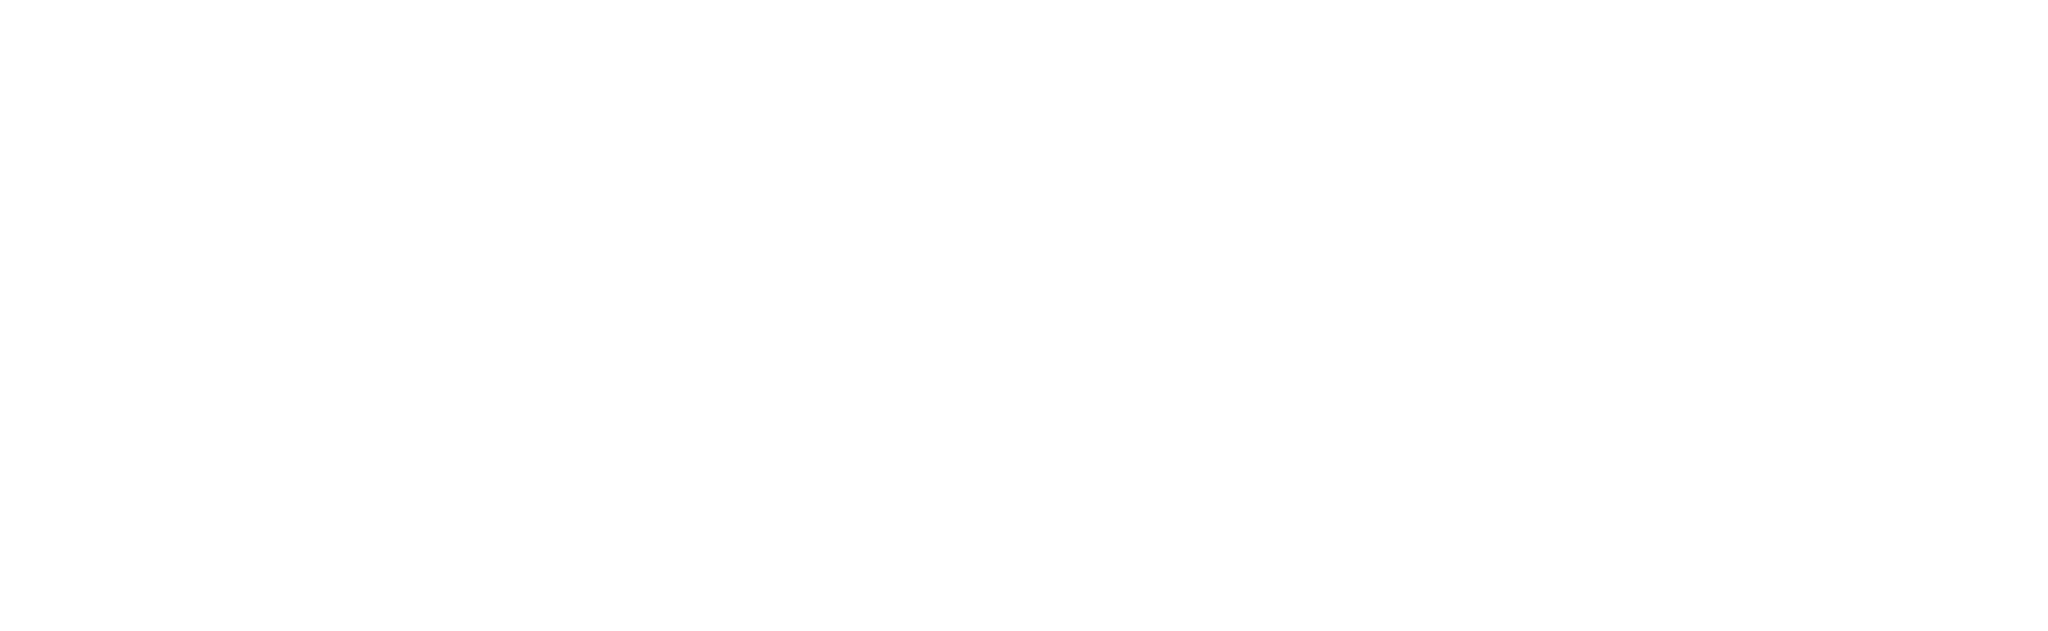 Pán-Trade Kft. 100% Fitness